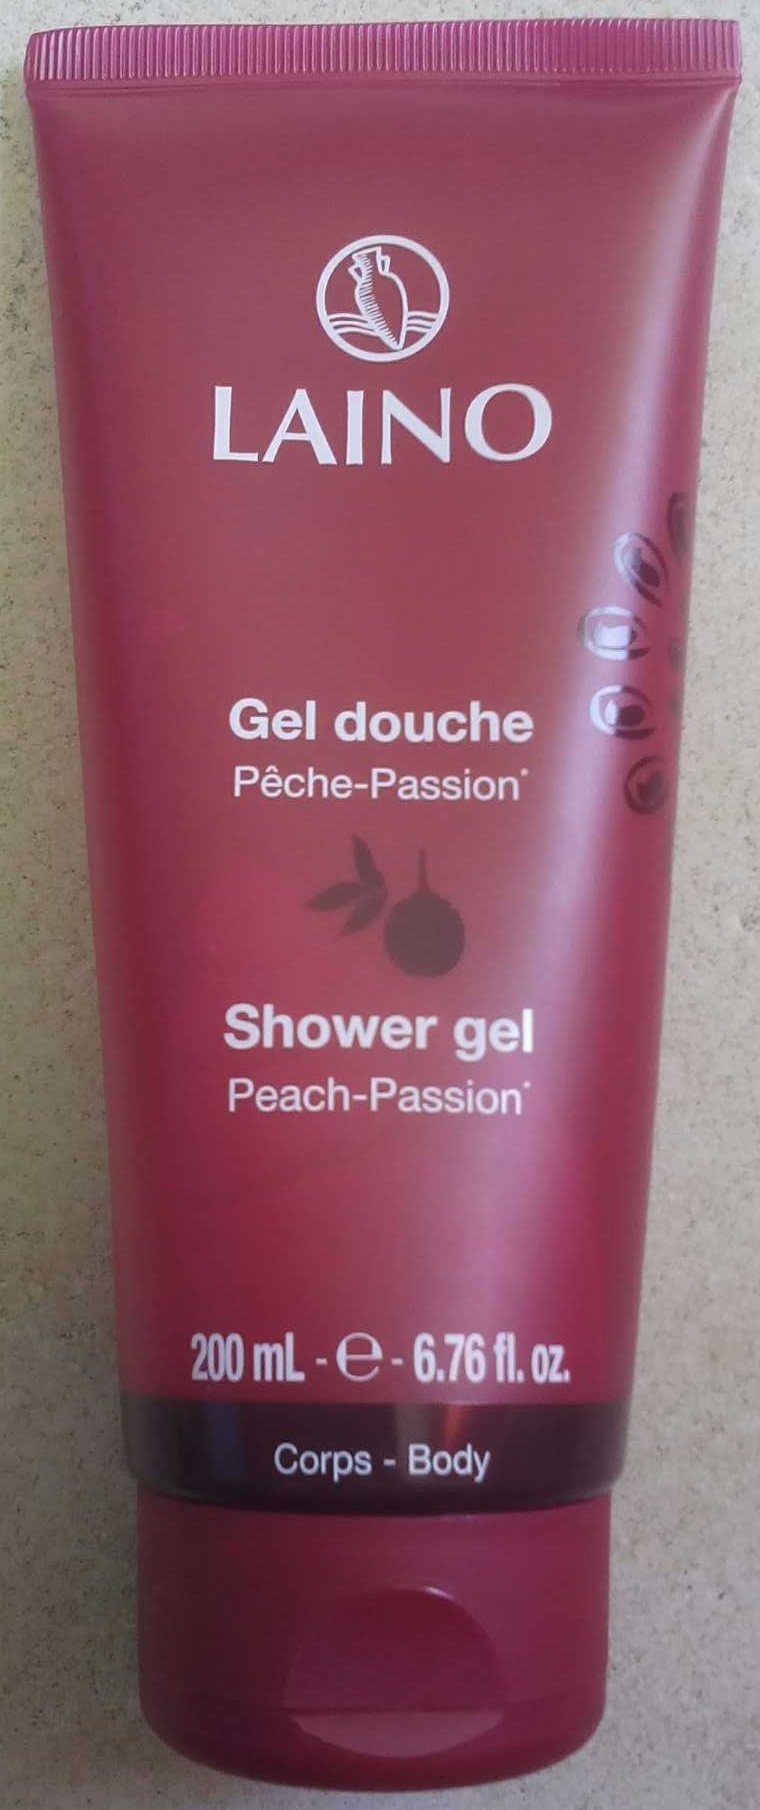 Gel douche Pêche-Passion - Product - fr